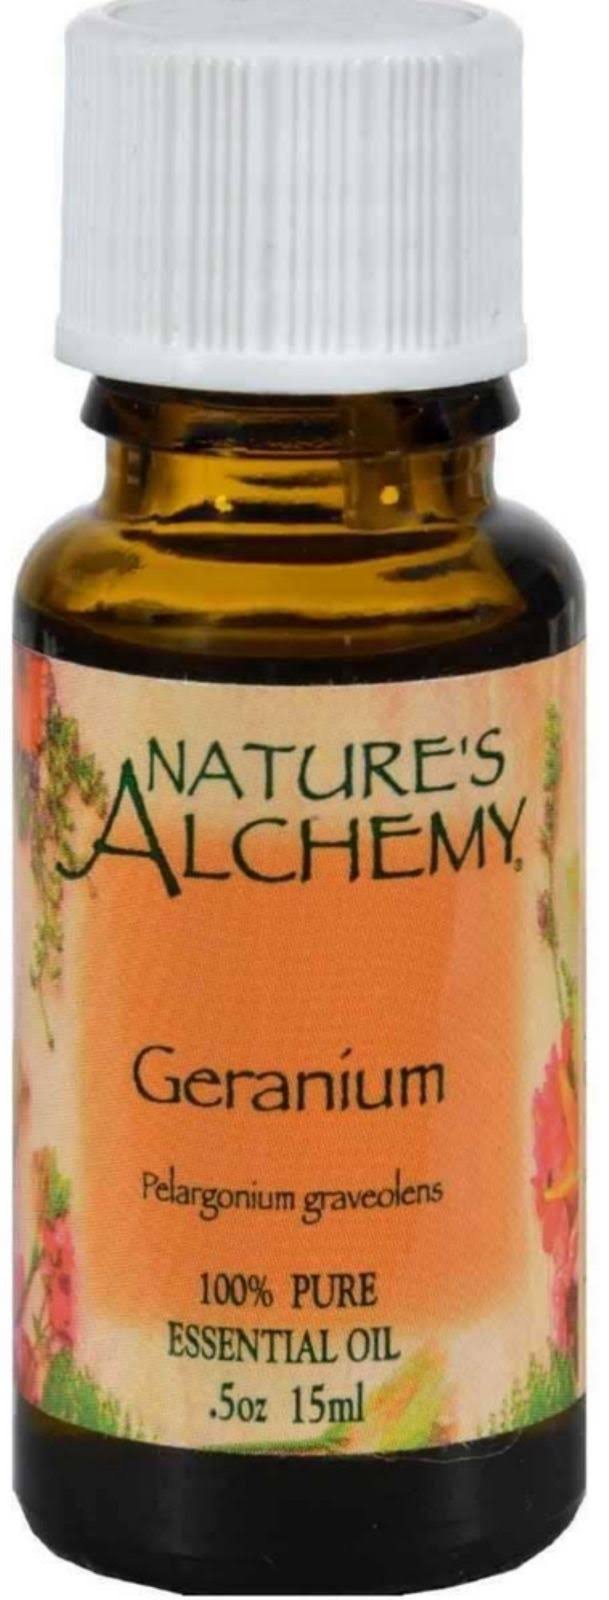 Nature's Alchemy Essential Oil - Geranium, 0.5oz